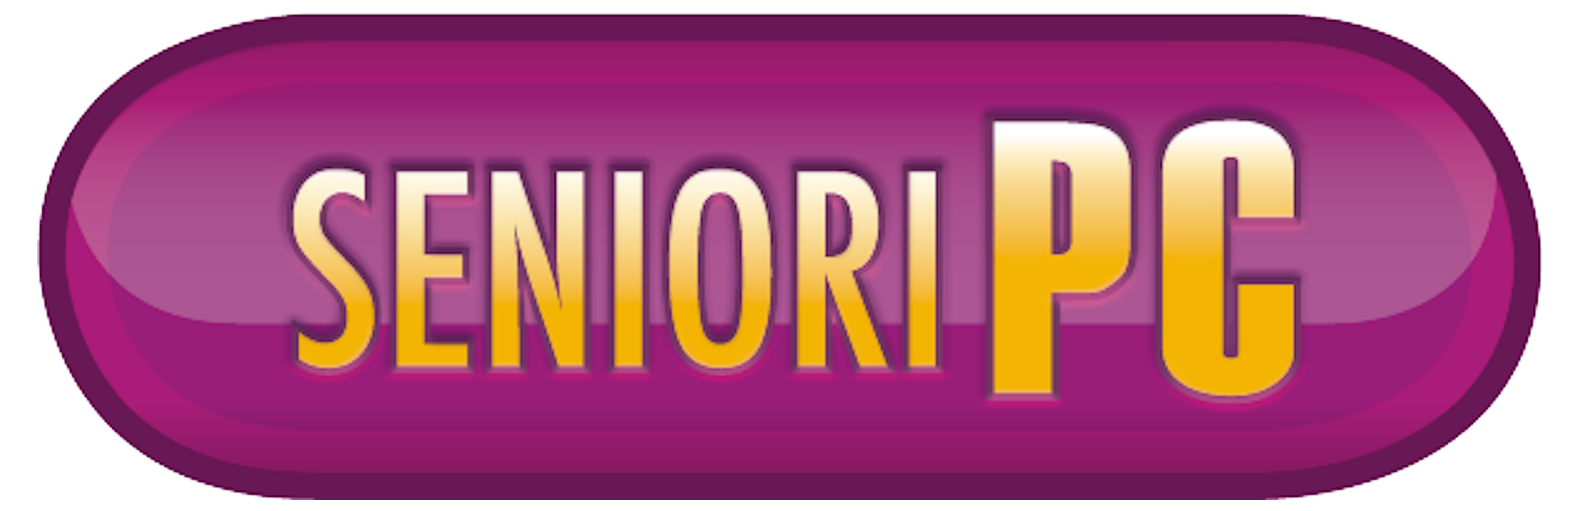 senioripc-logo